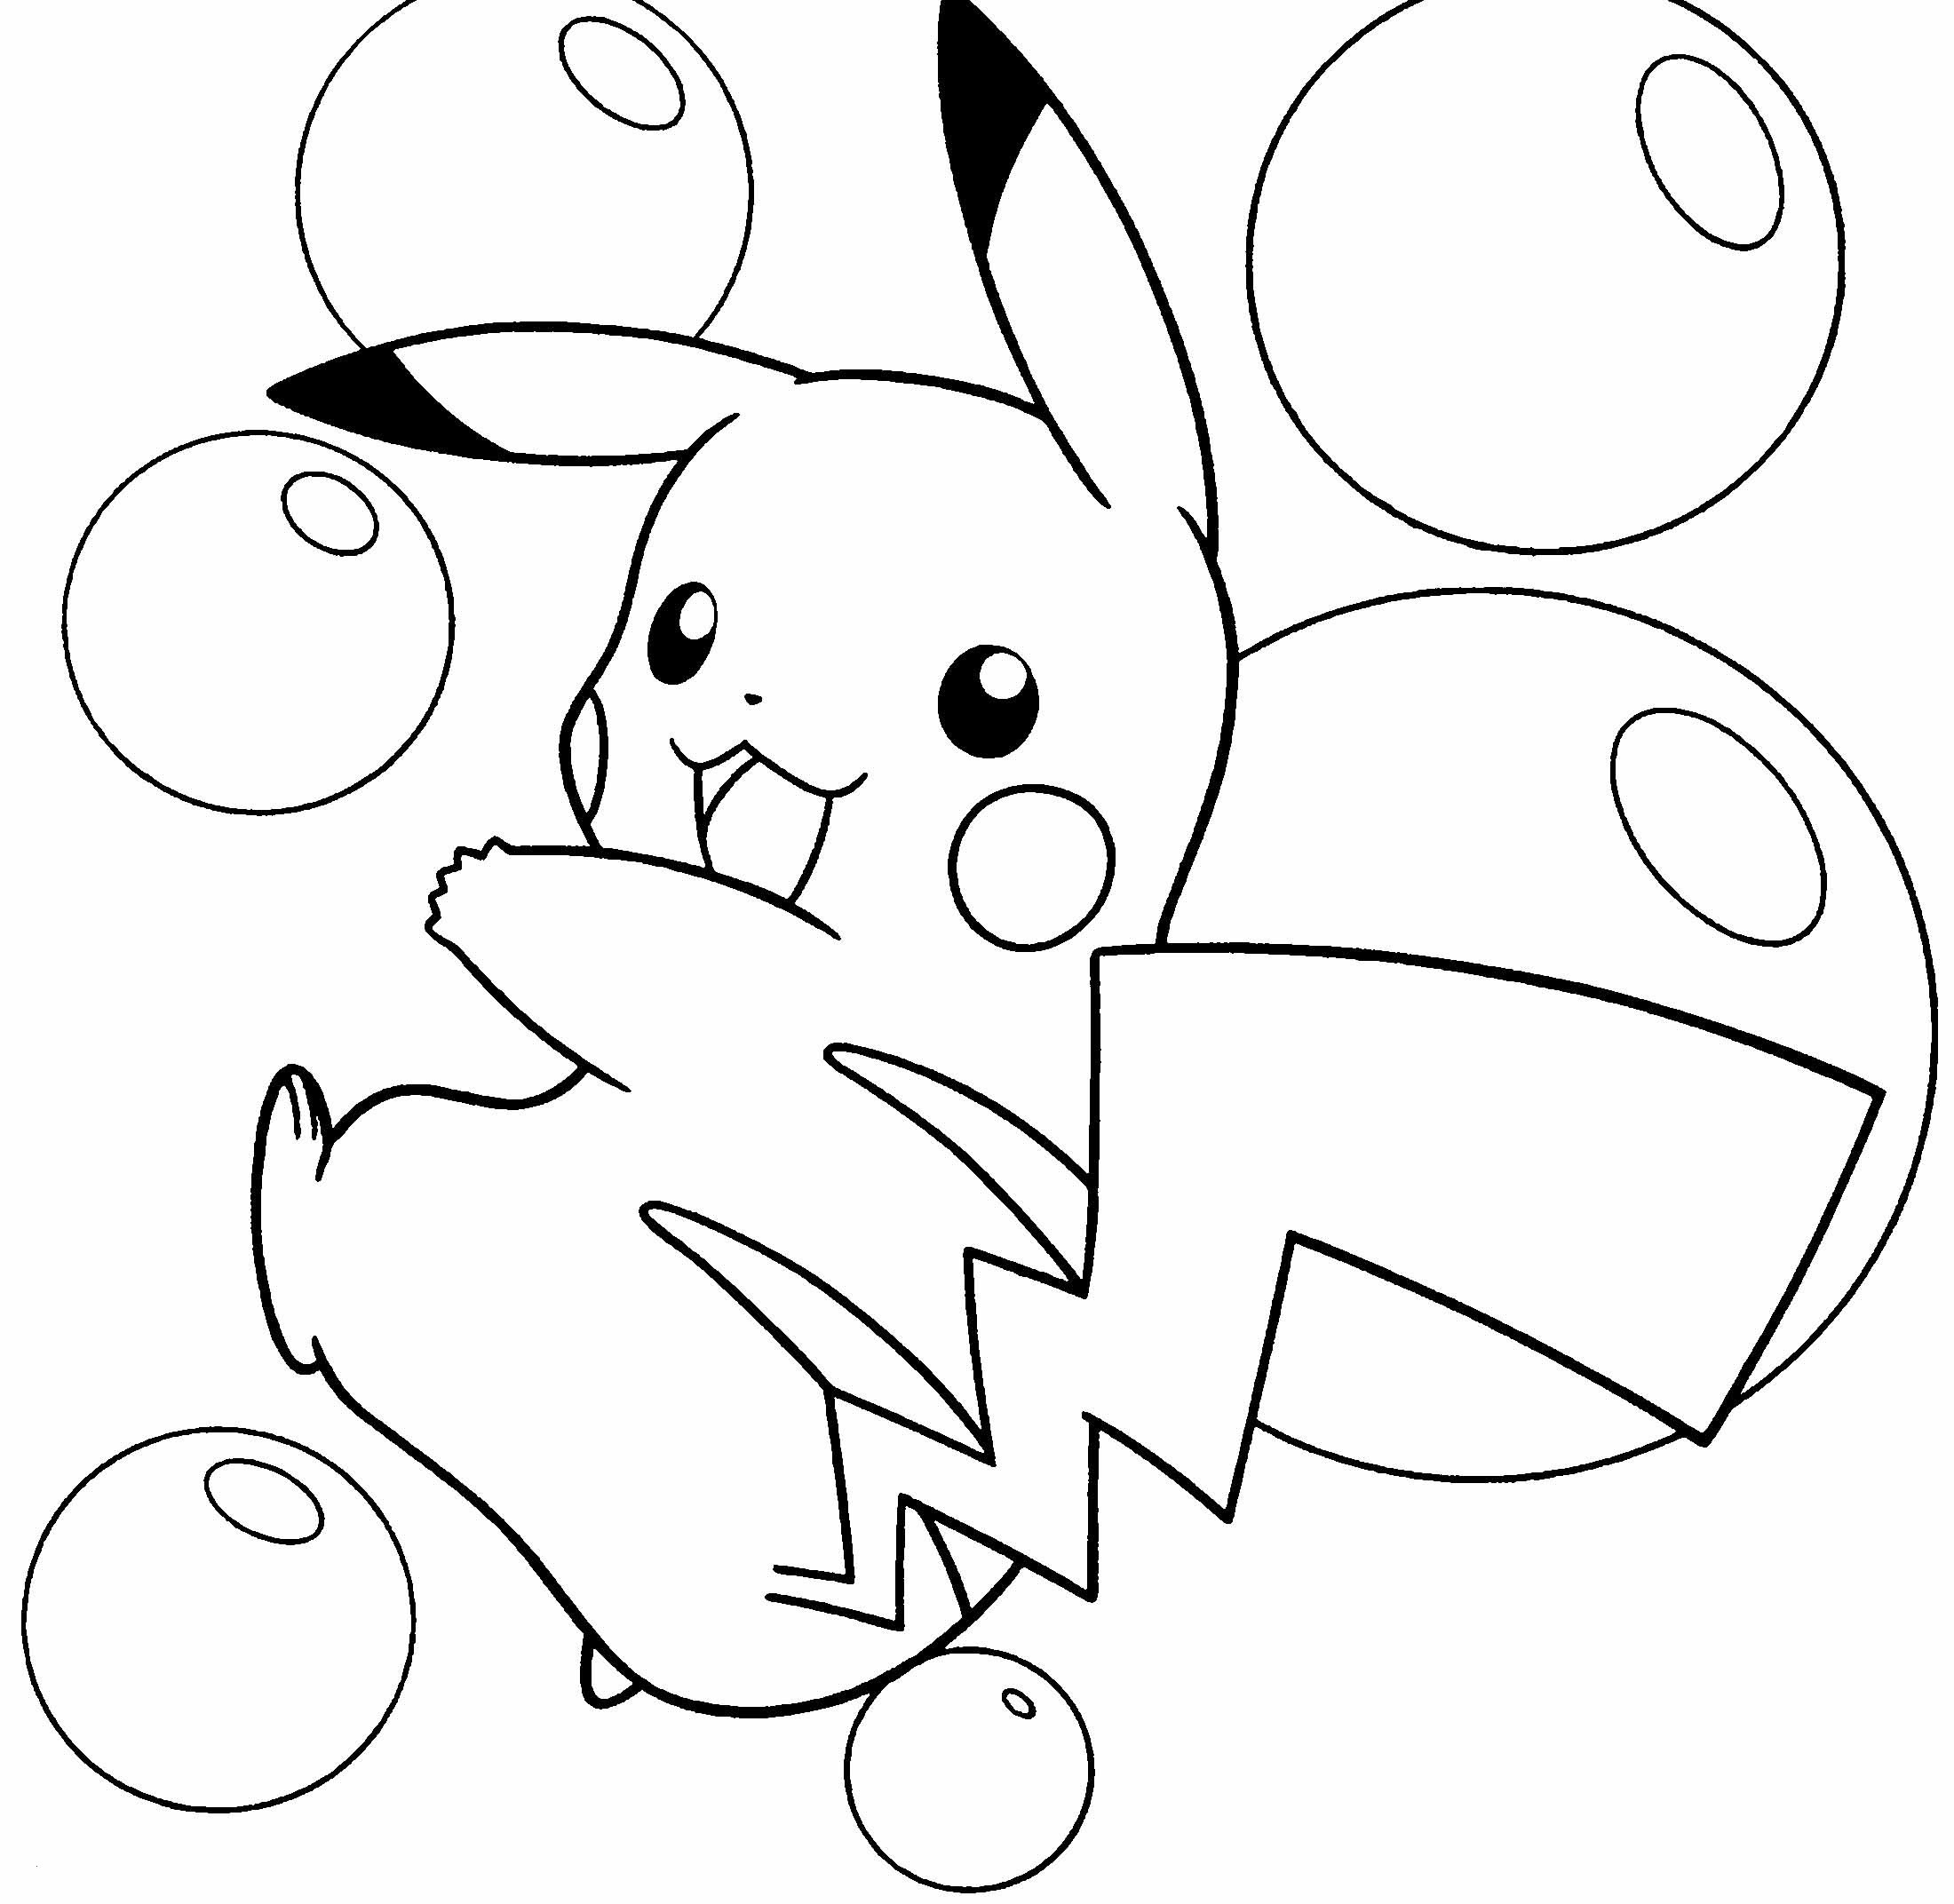 Pikachu Coloring Page - BubaKids.com